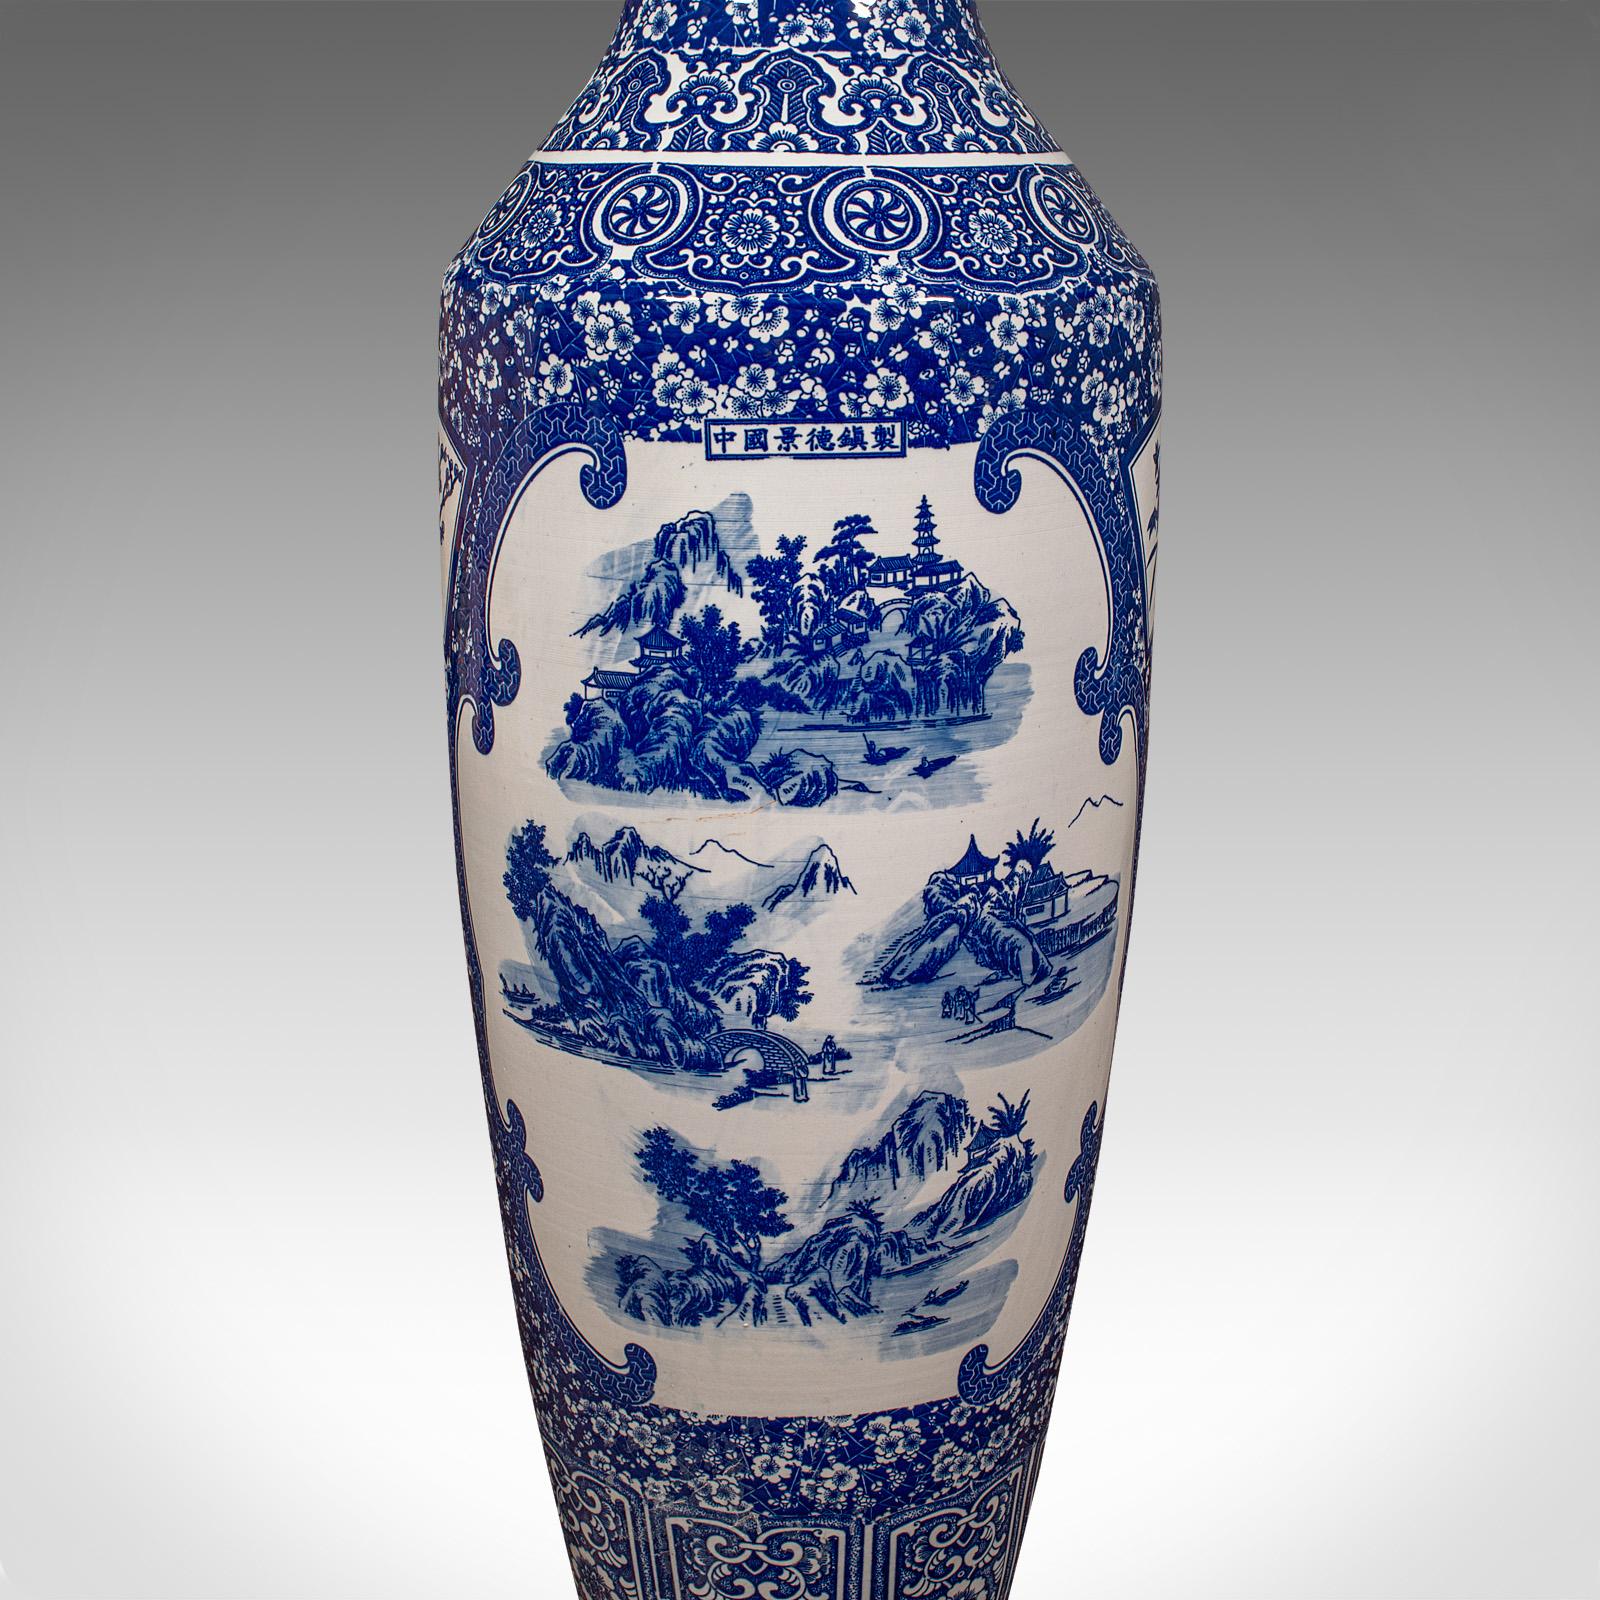 4' Tall Vintage Floor Vase, Chinese, Blue & White, Ceramic, Display, Art Deco For Sale 6